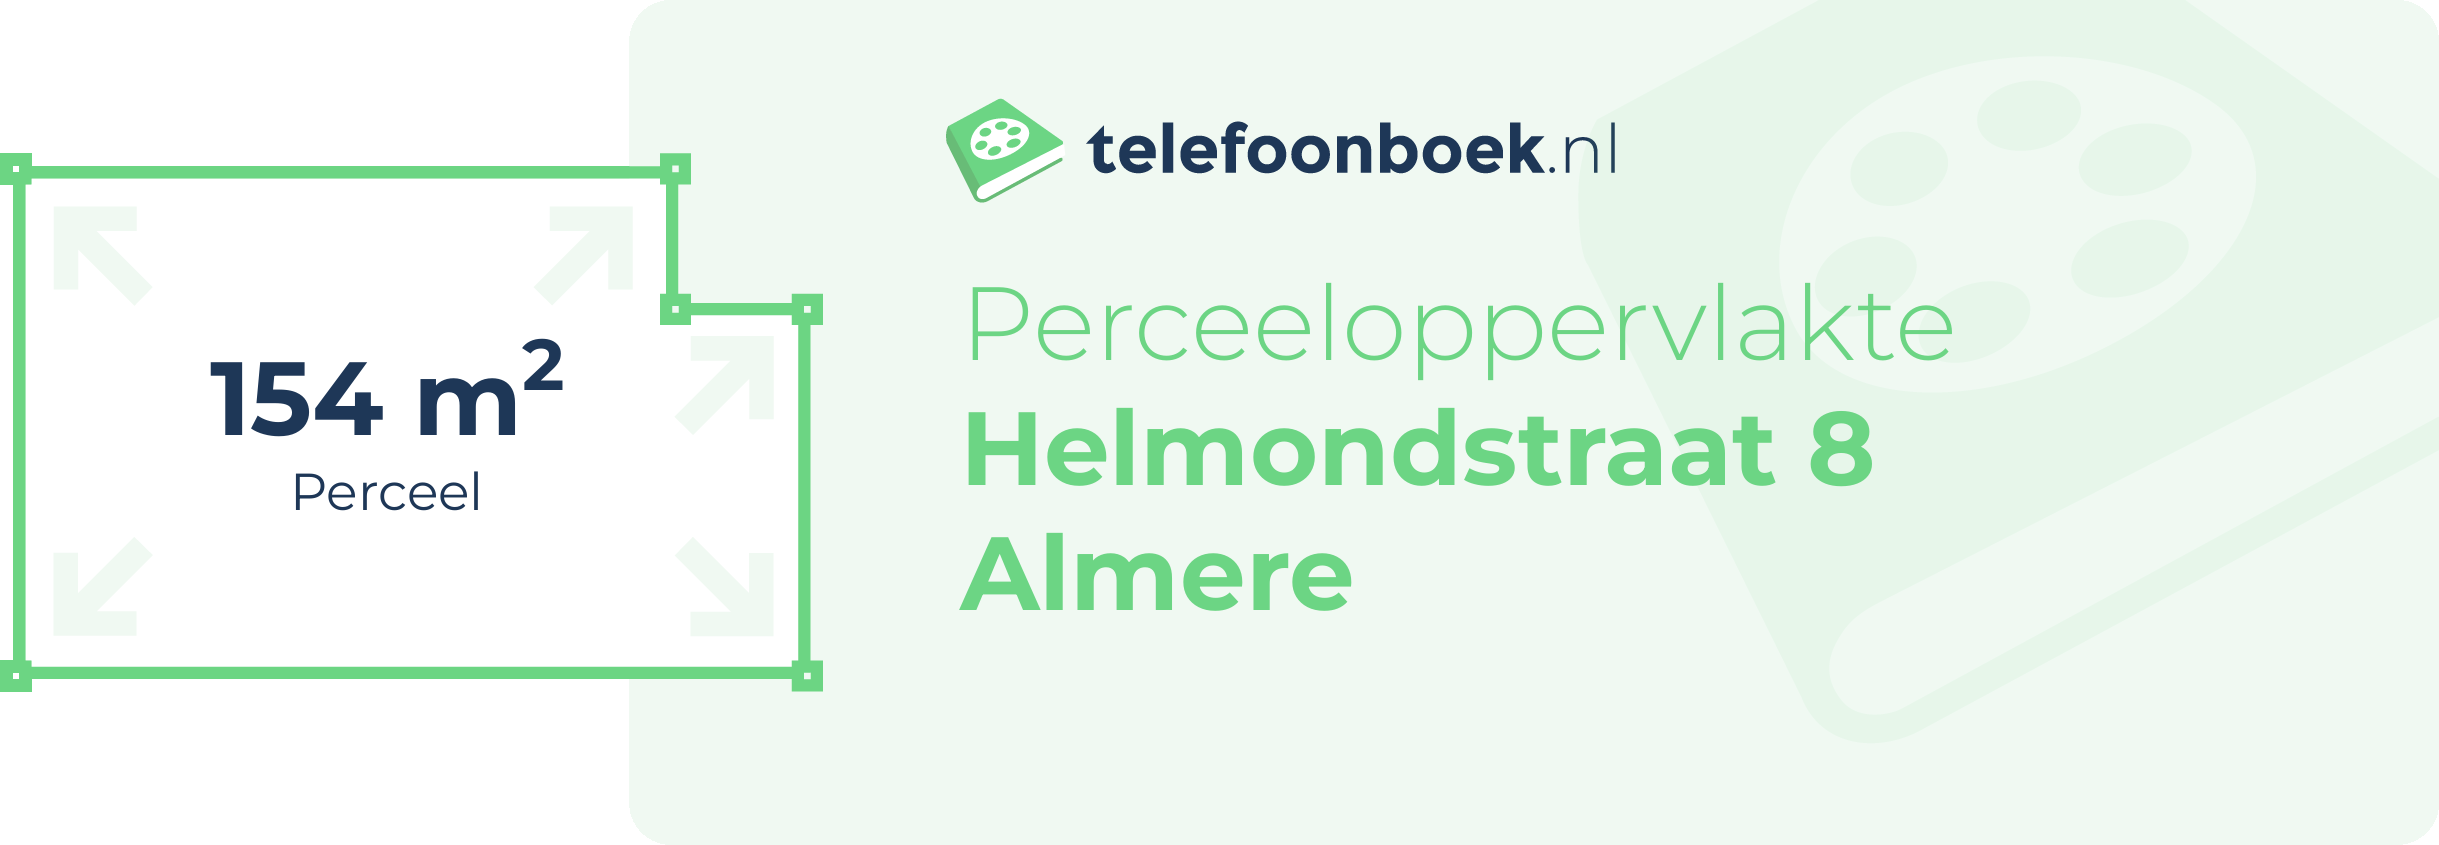 Perceeloppervlakte Helmondstraat 8 Almere